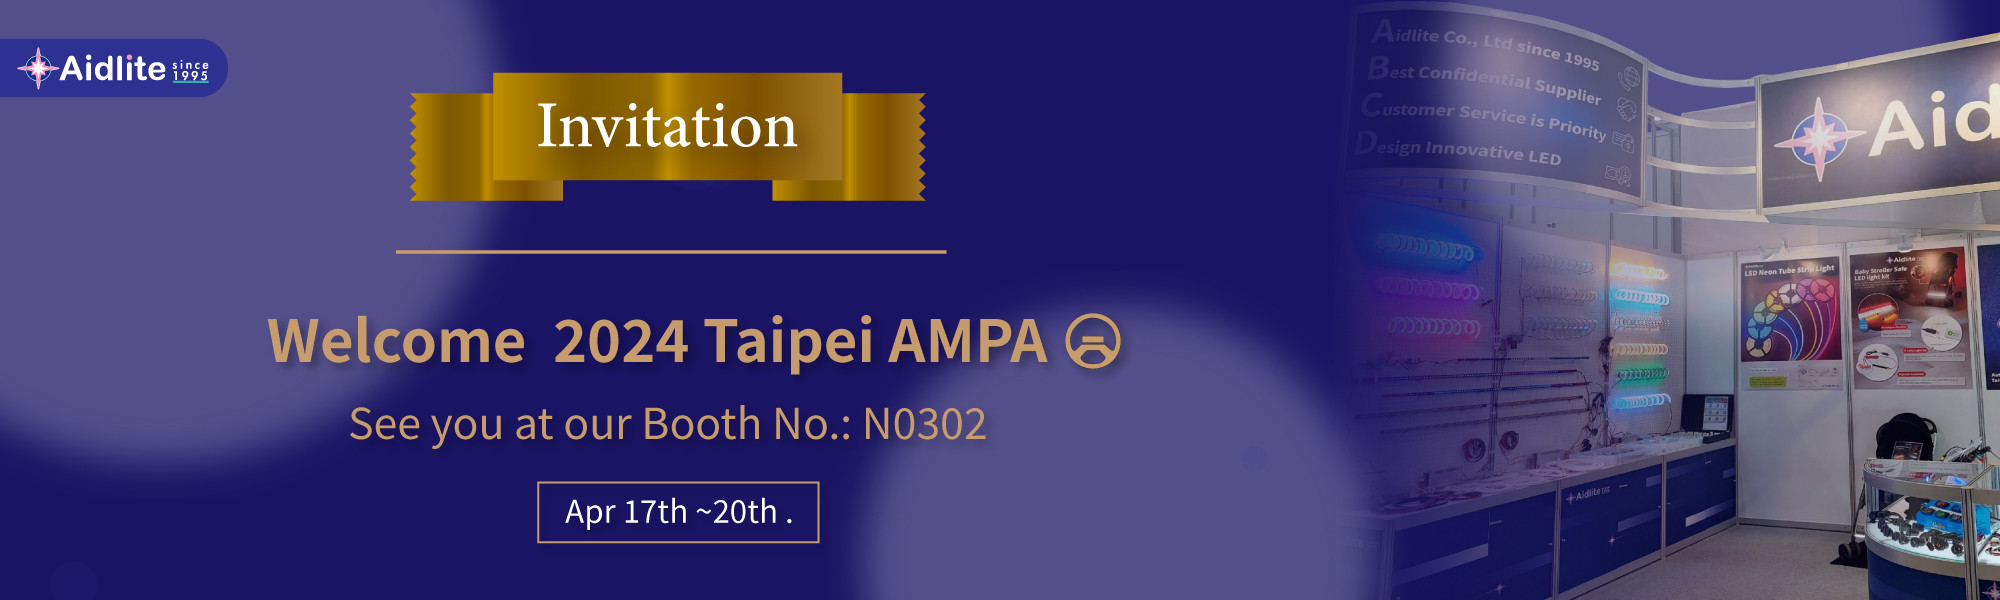 2024 TAIPEI AMPA INVITATION